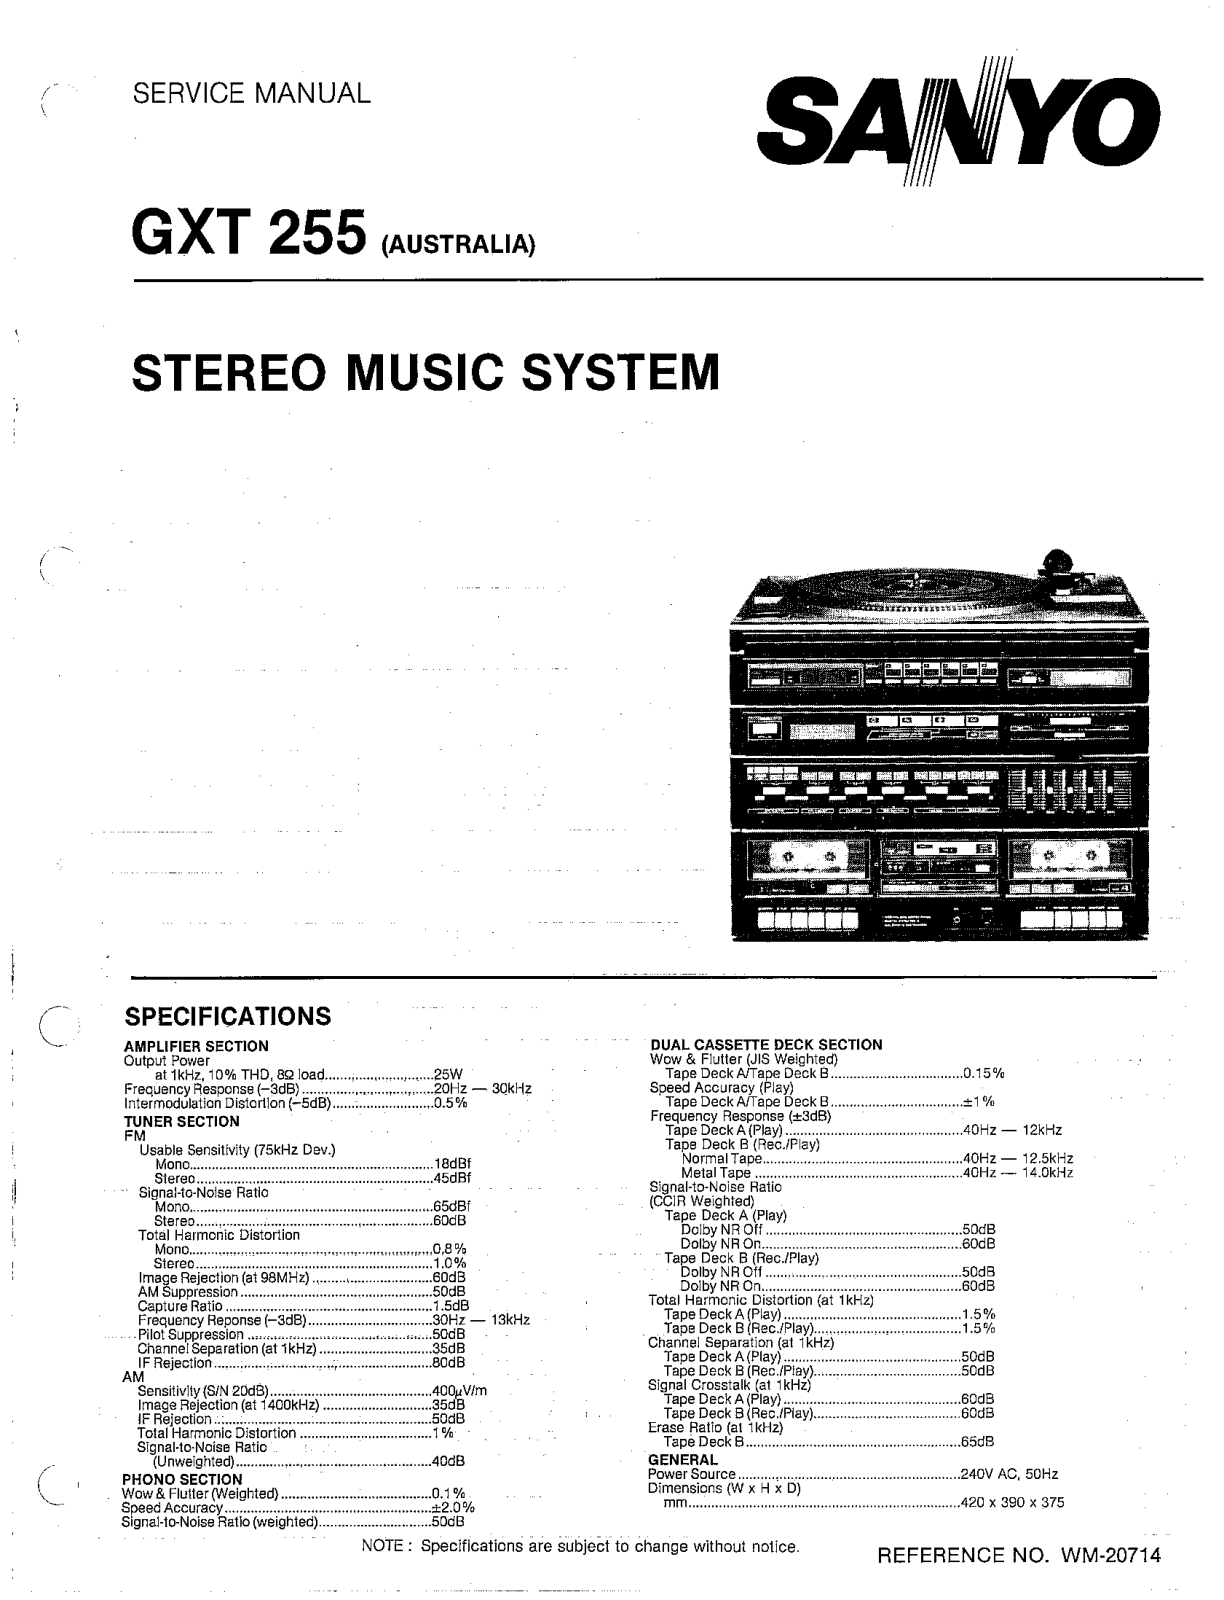 Sanyo GXT-255 Service manual